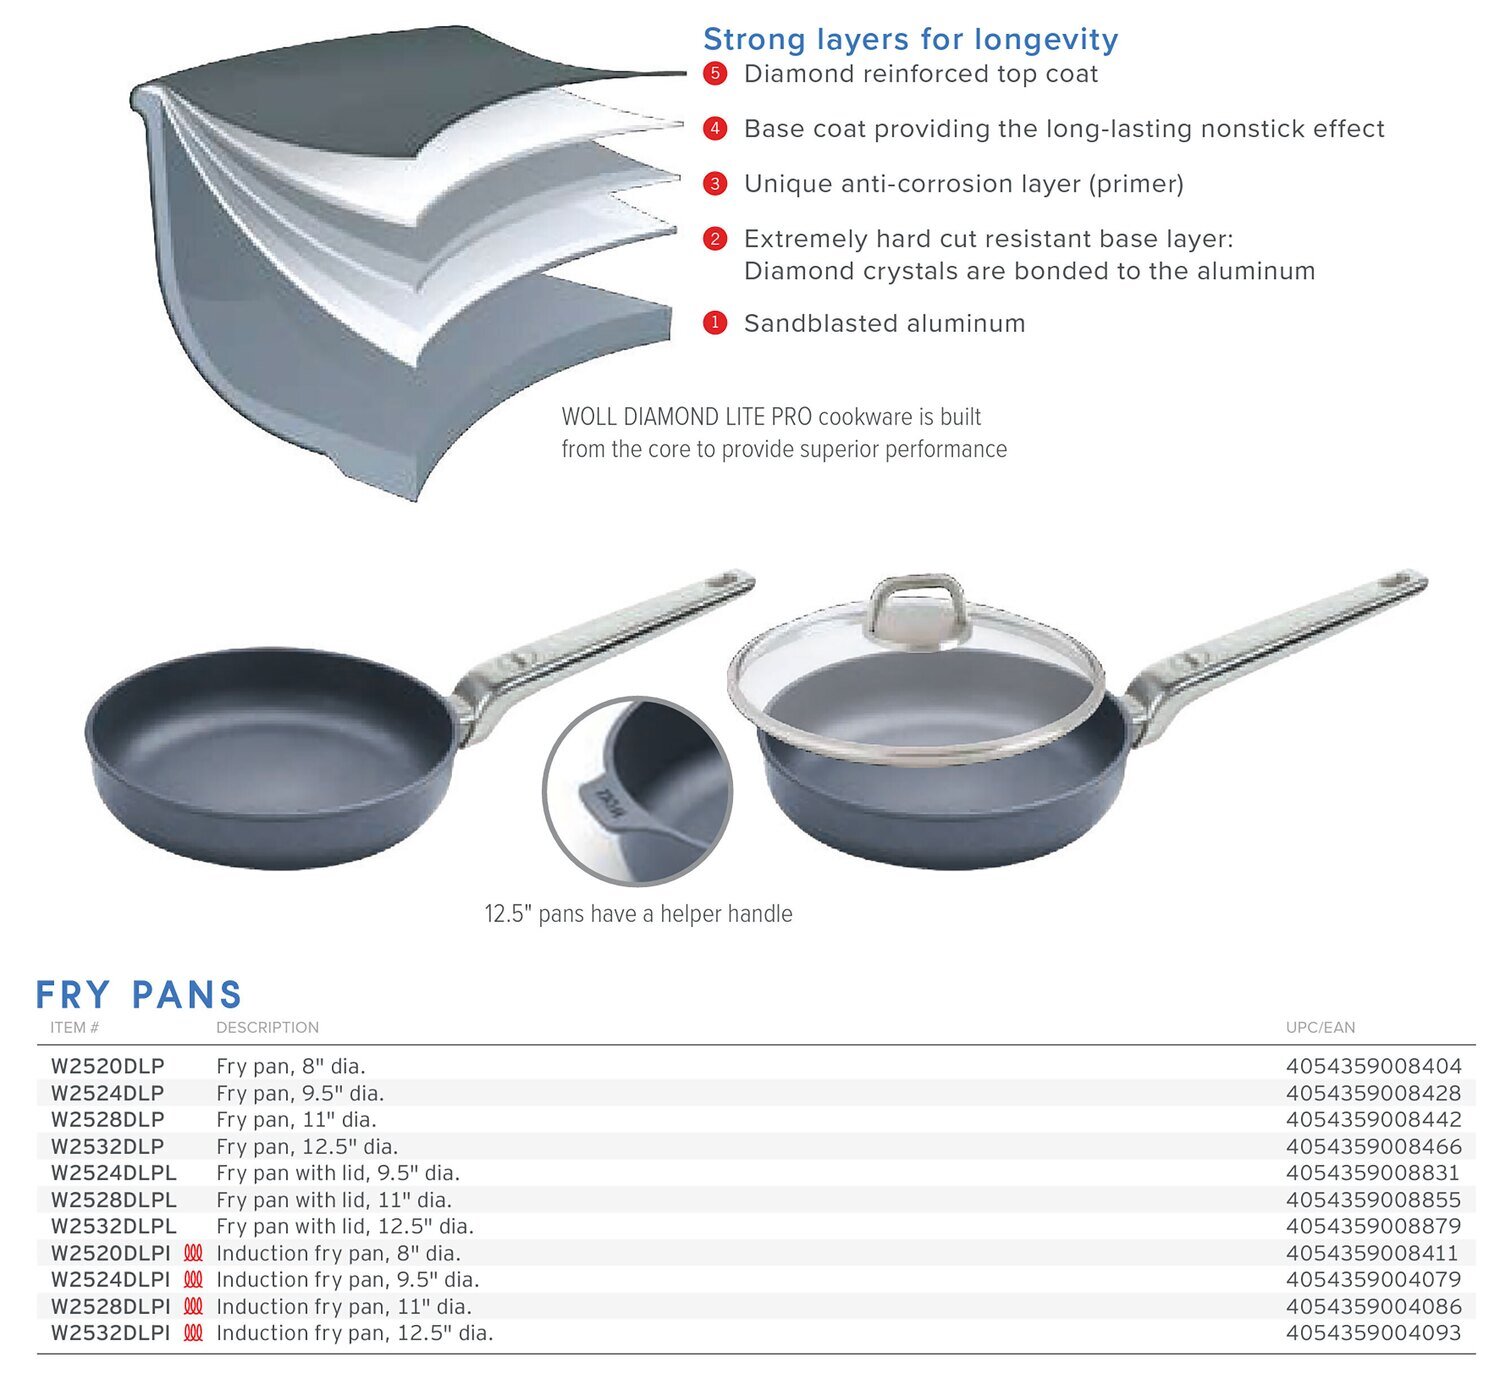 Frieling Diamond Lite Fry Pan with Lid 11" W528DPSL